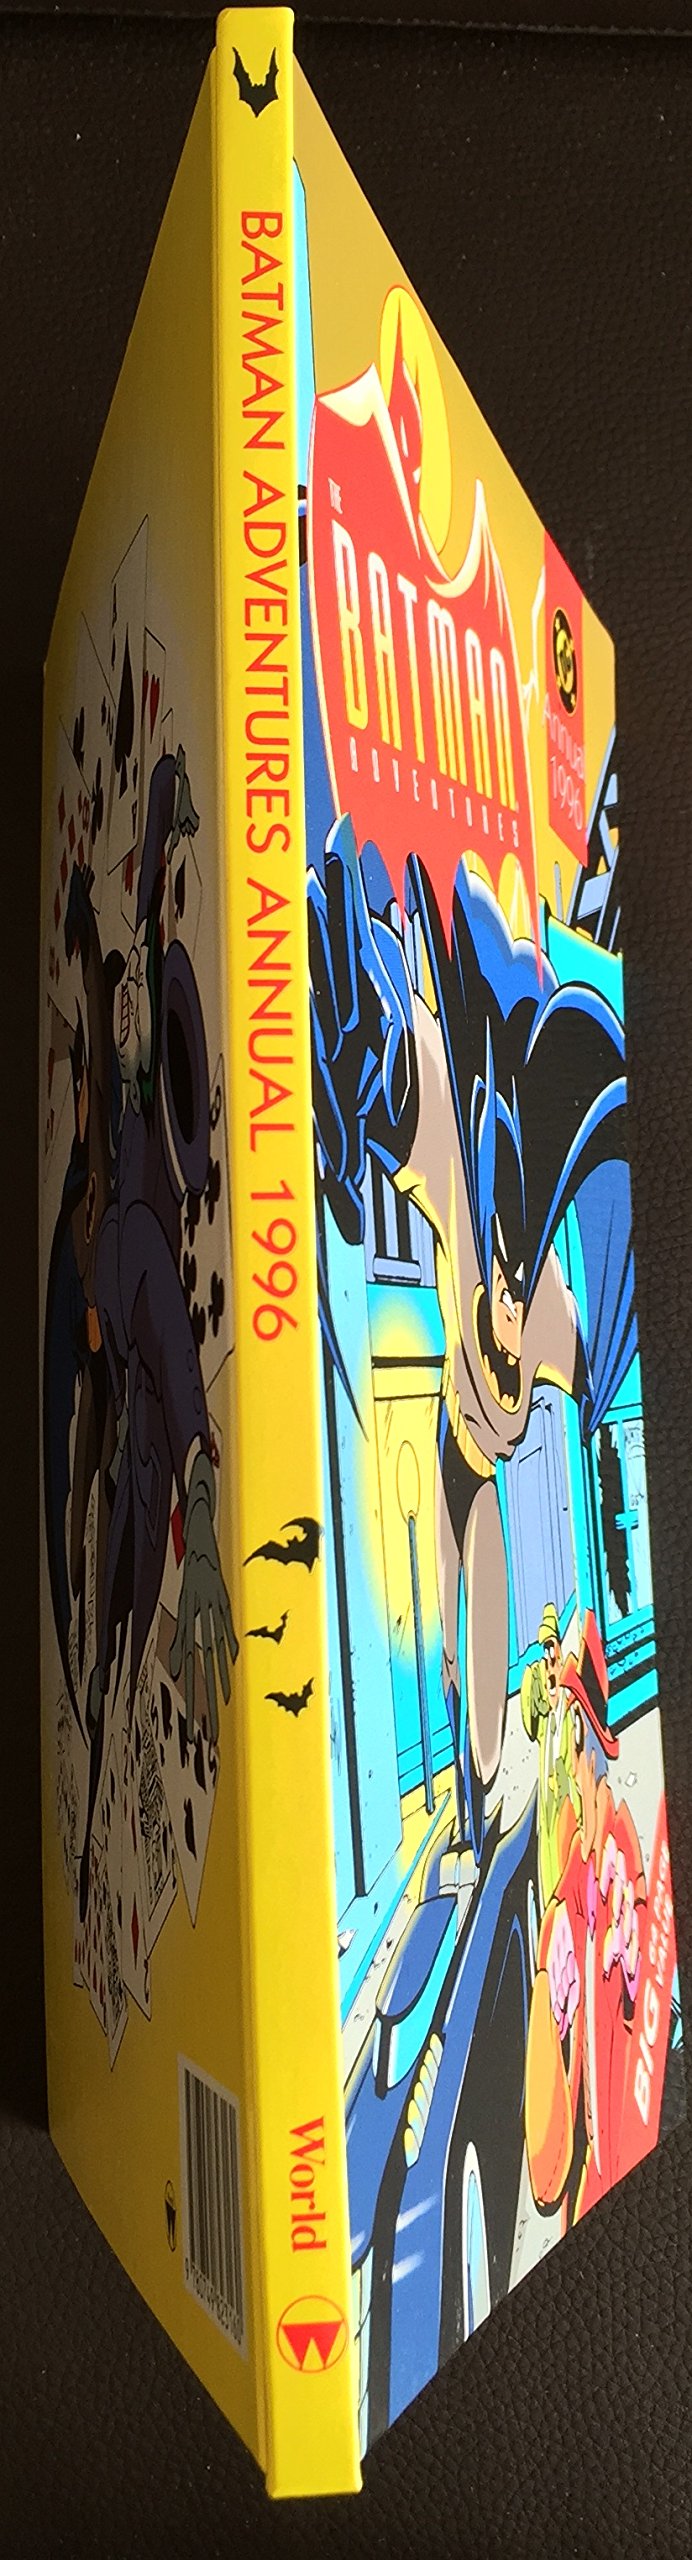 Vintage DC Comics The Batman Adventures Annual 1996 - Brand New Shop stock room find